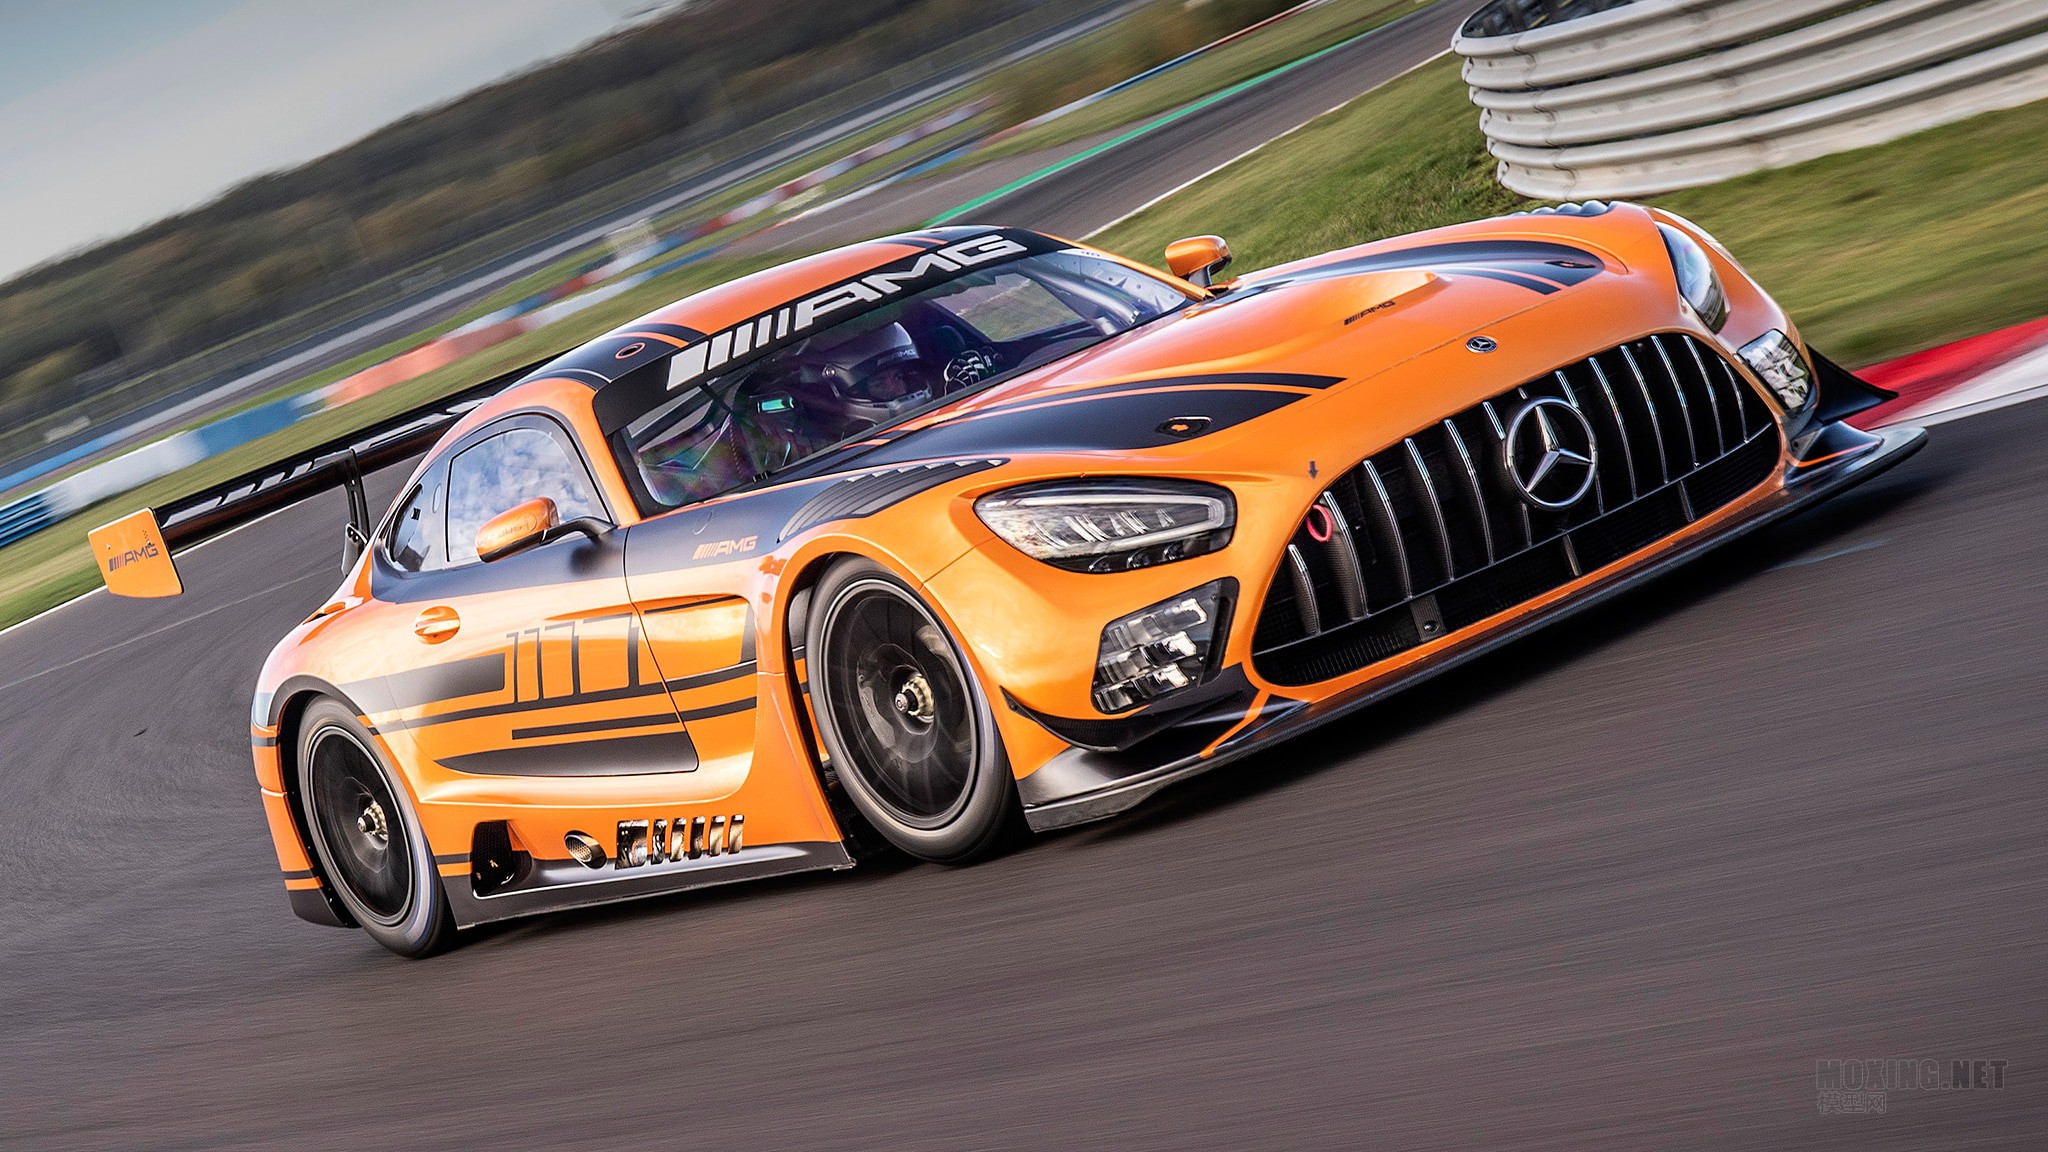 2020-Mercedes-AMG-GT3-on-track-in-motion-1.jpg